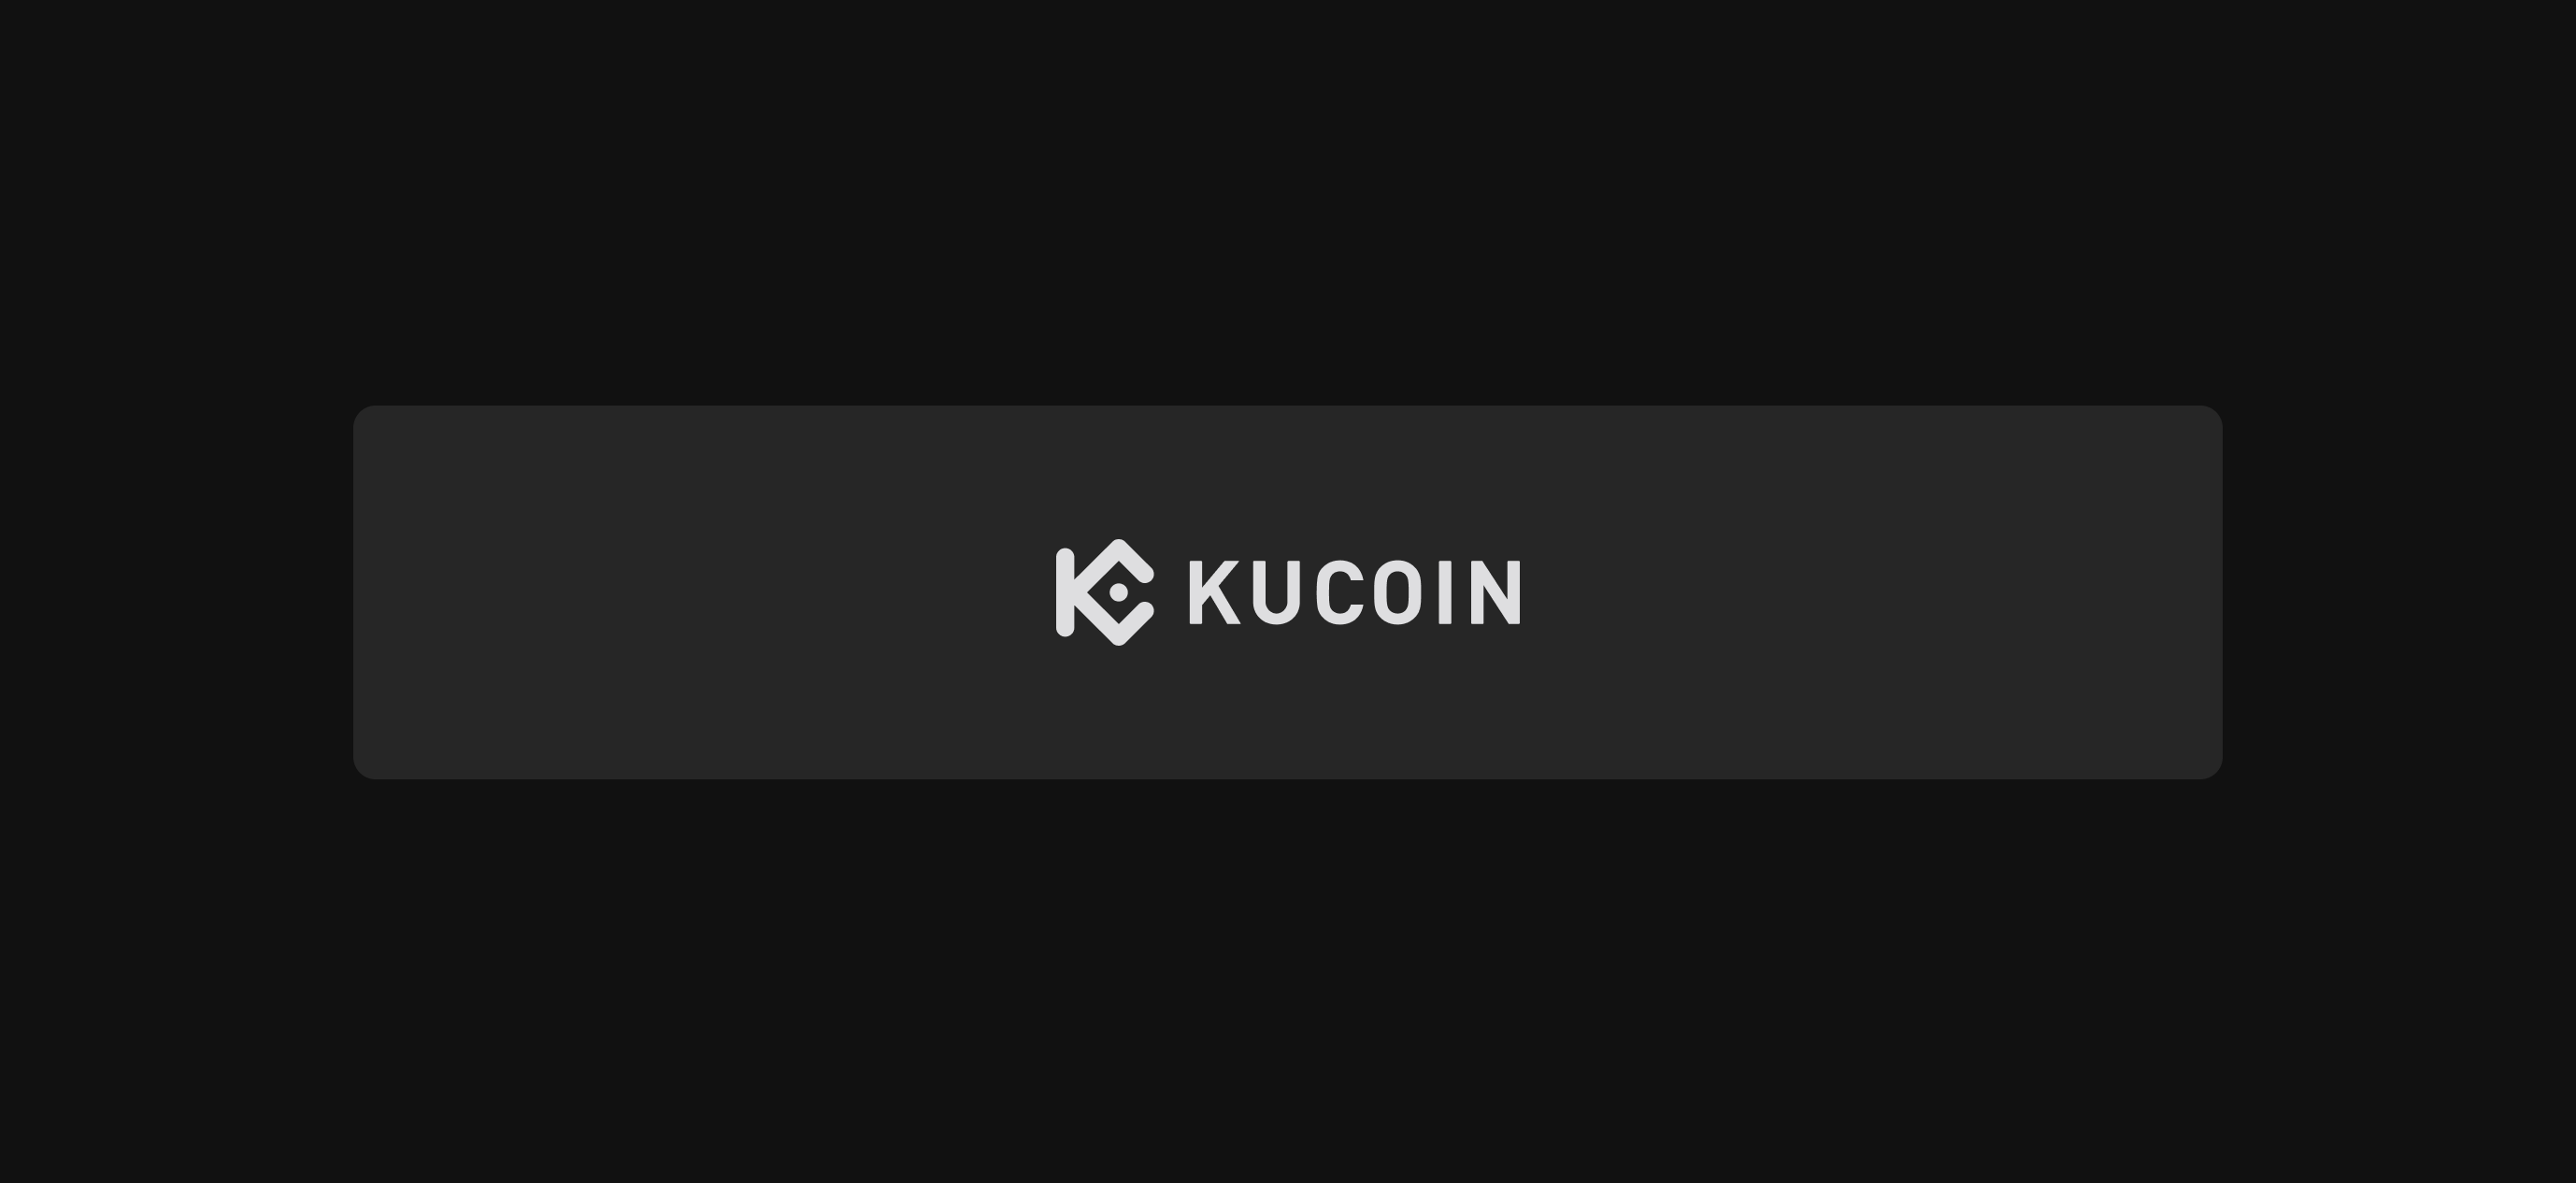 [NOIA/USDT](https://www.kucoin.com/trade/spot/NOIA-USDT) & [NOIA/BTC](https://www.kucoin.com/trade/NOIA-BTC) trading pairs on [Kucoin](https://www.kucoin.com/)